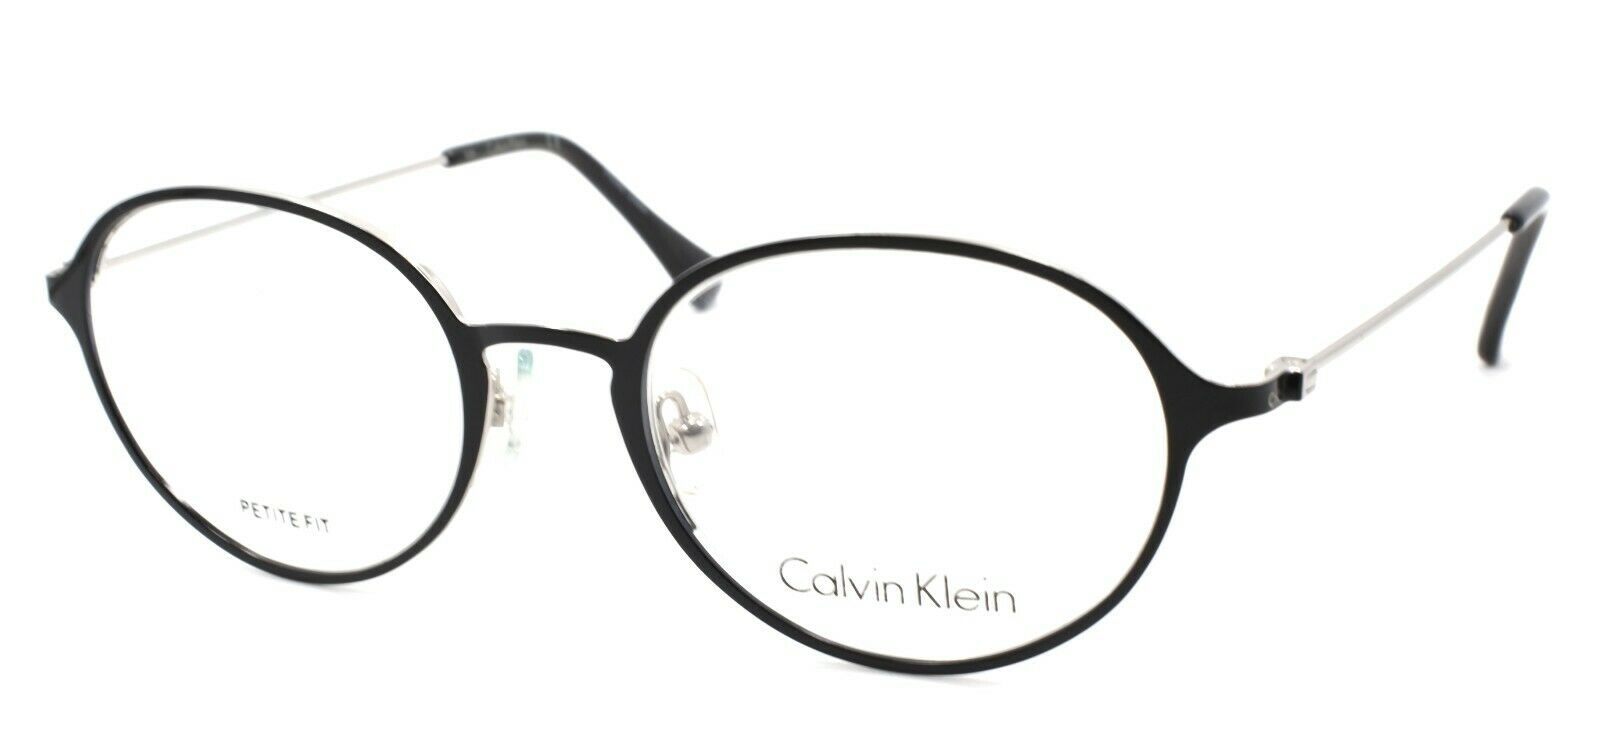 1-Calvin Klein CK5433 001 Kids Girls Eyeglasses Frames PETITE 46-19-135 Black-IKSpecs